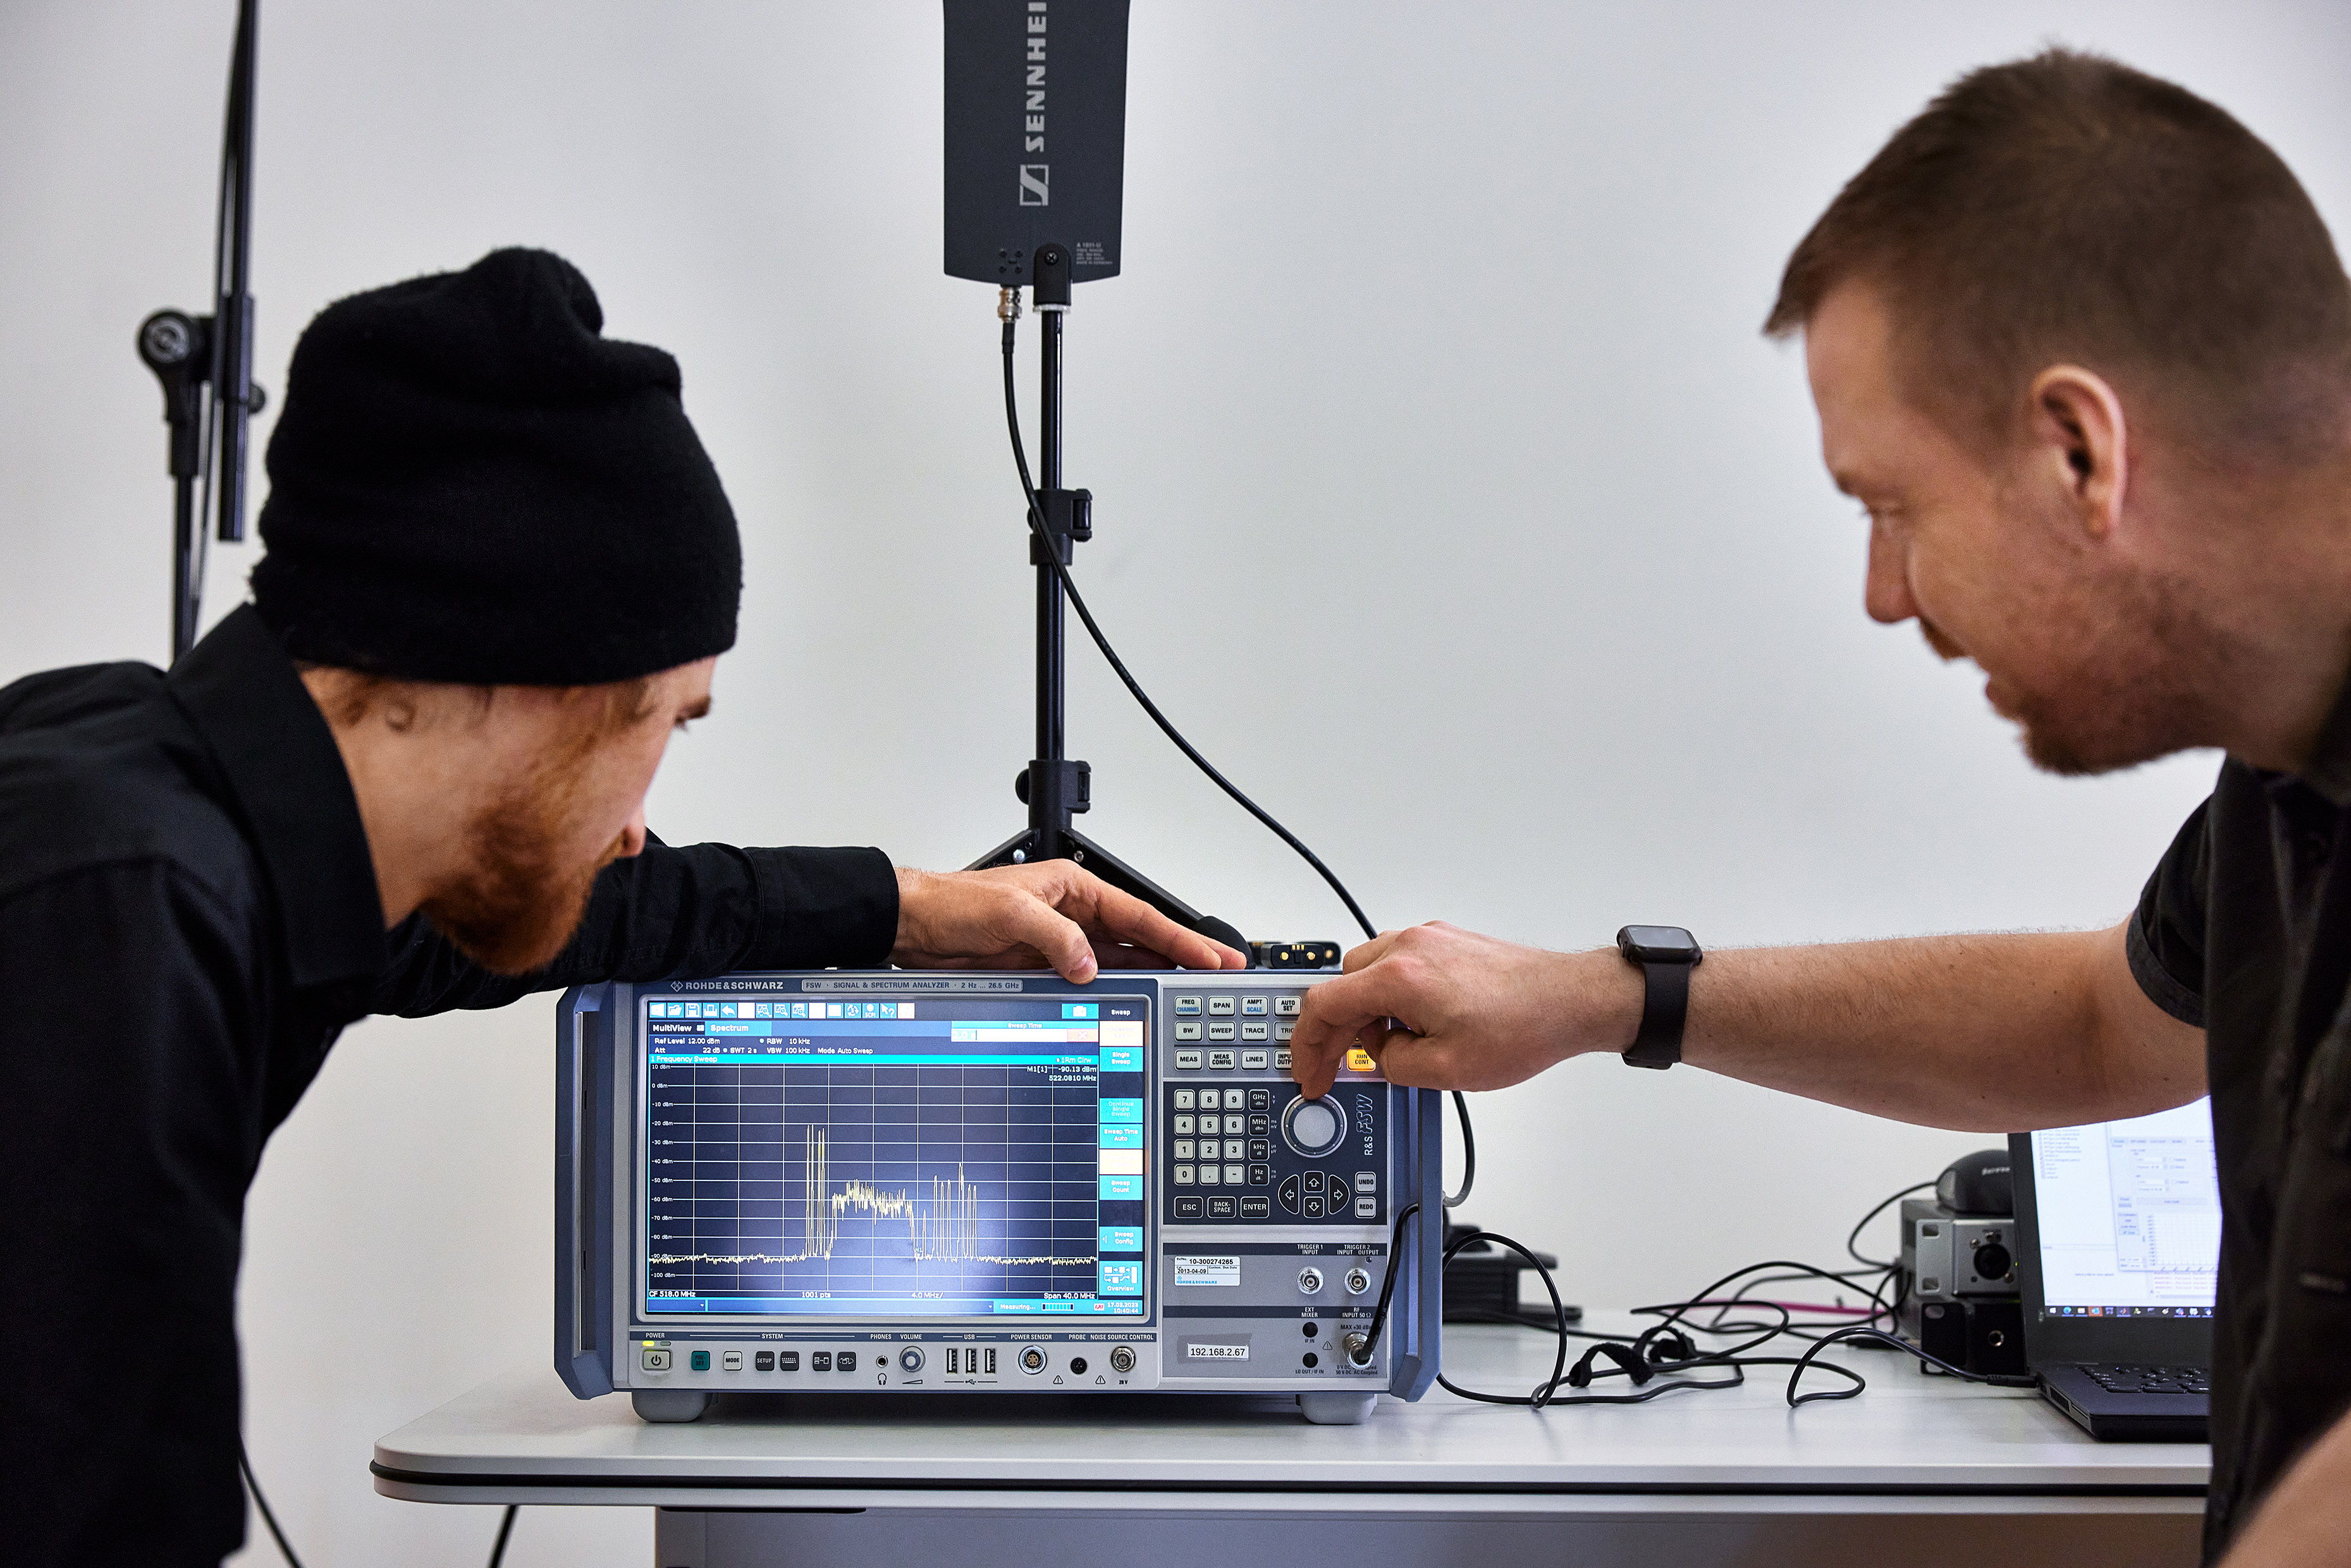 Marco Völzke（左）和 Jonas Naesby 在频谱分析仪前。分析仪显示宽带WMAS信号的左侧有四个高功率耳返监听载波，右侧有八个窄带EW-DX载波